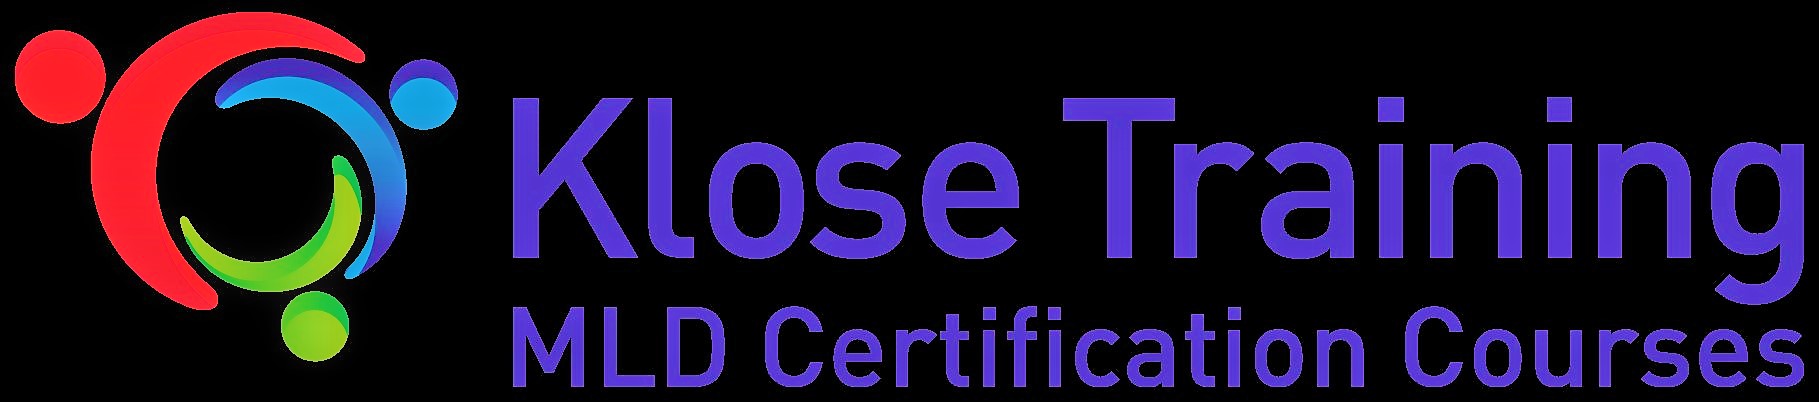 Klose training logo